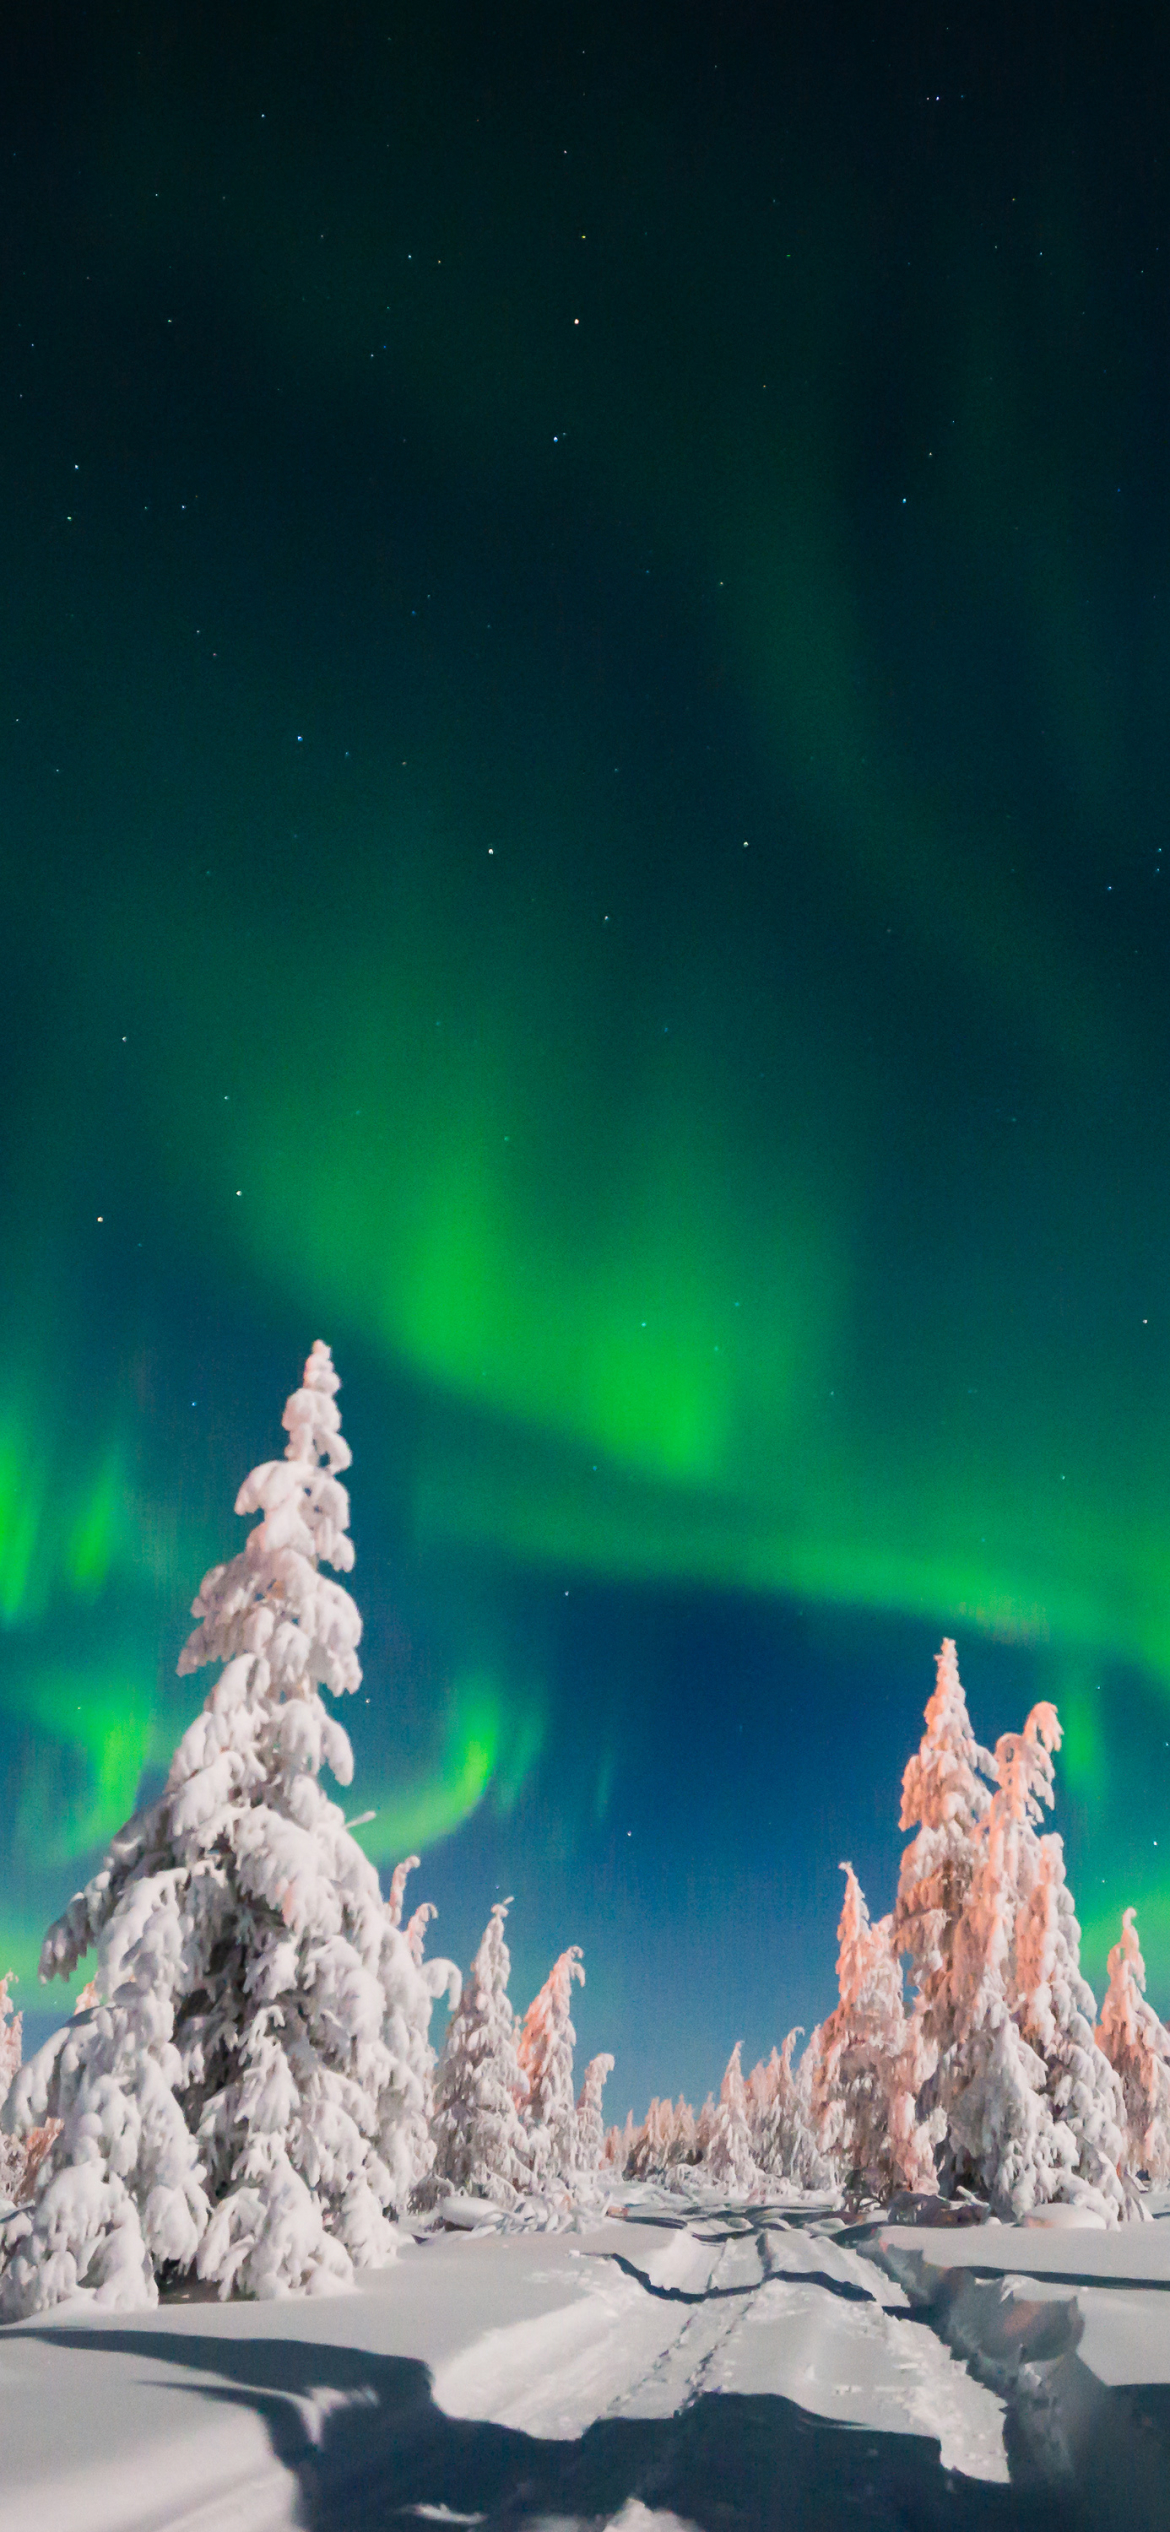 Descarga gratuita de fondo de pantalla para móvil de Invierno, Cielo, Nieve, Bosque, Árbol, Aurora Boreal, Tierra/naturaleza.